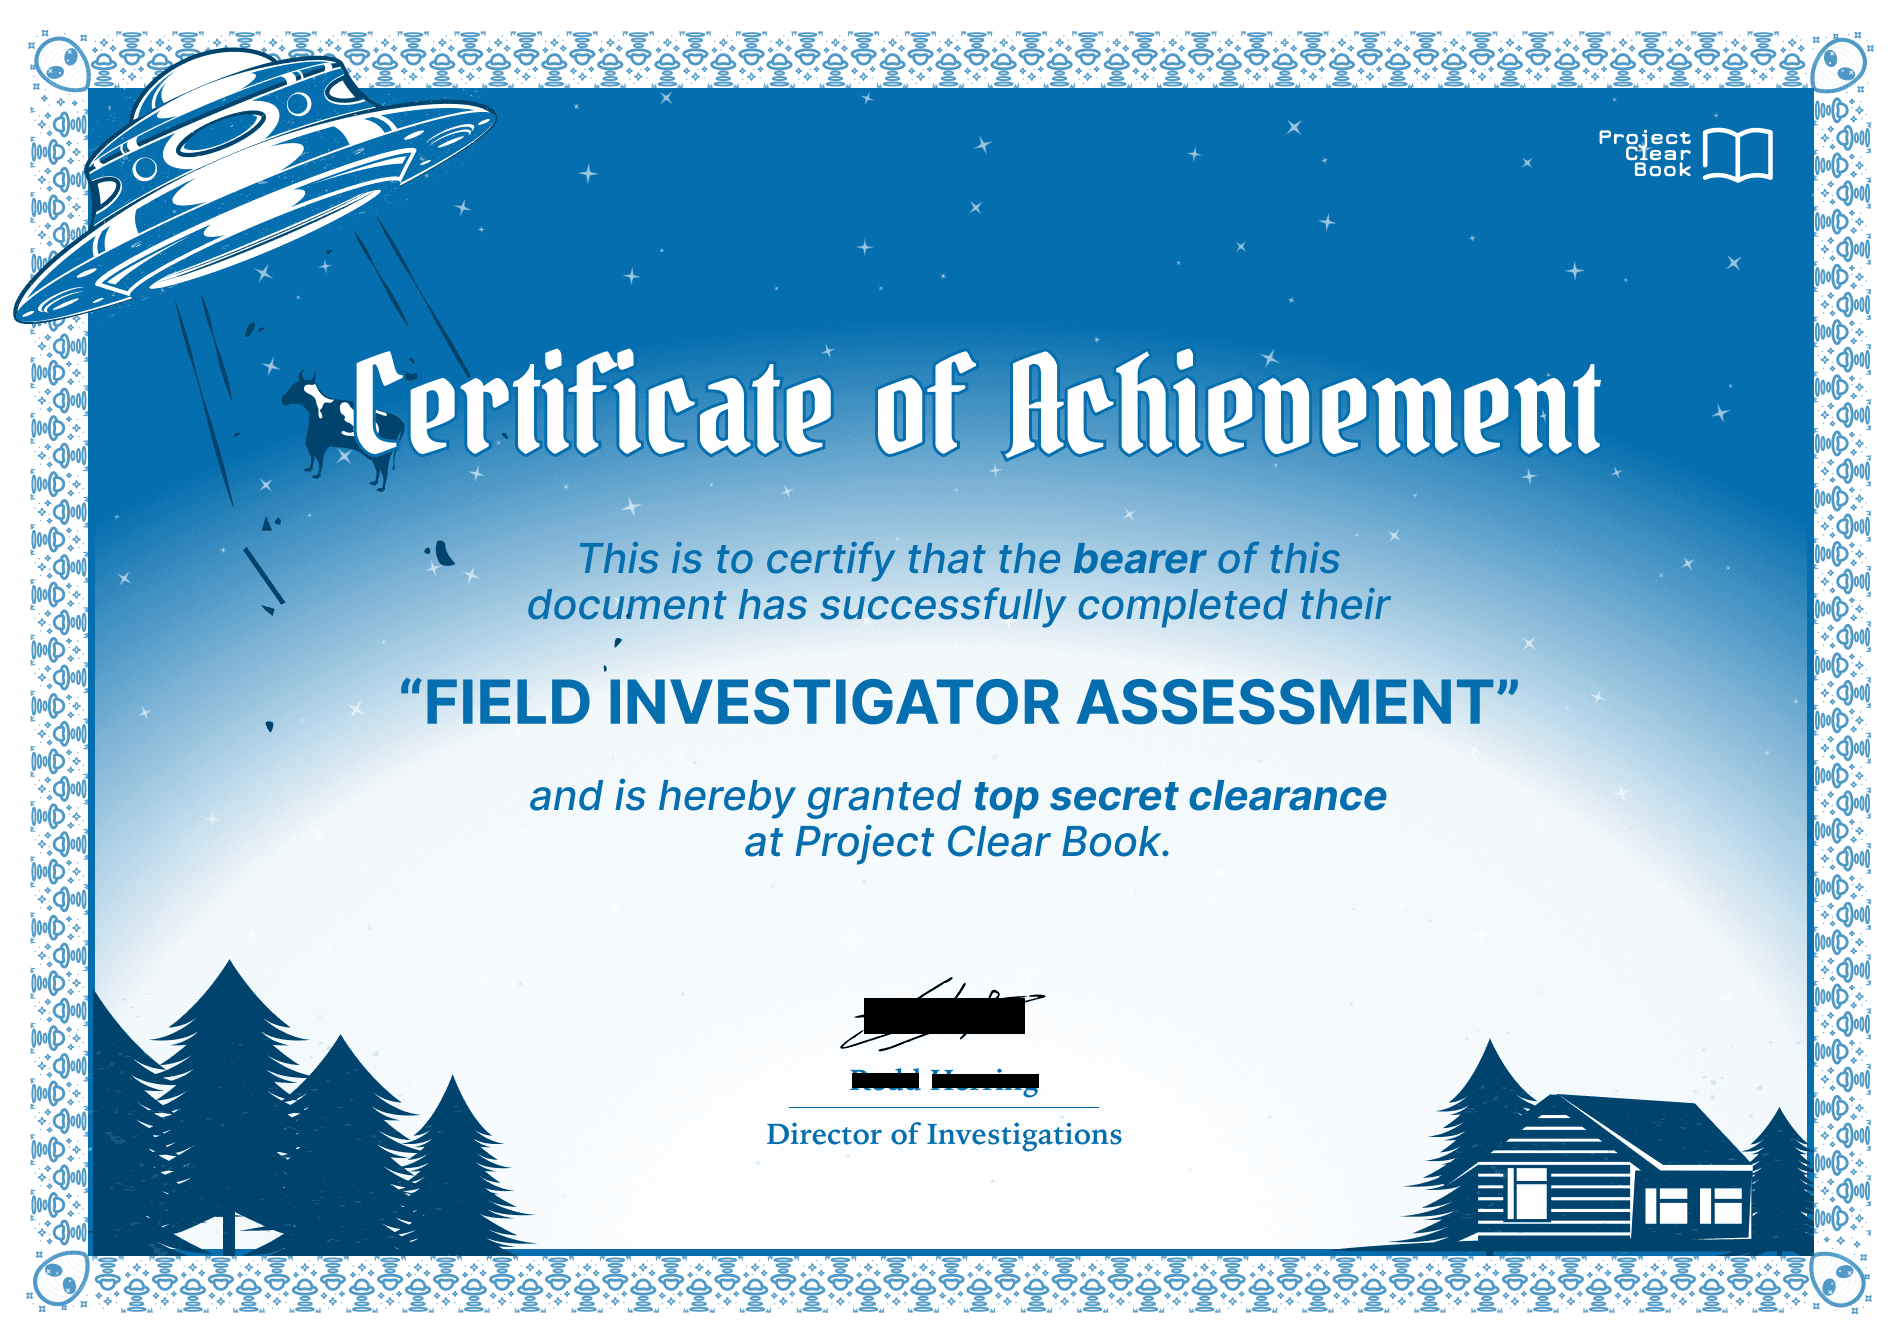 Field Investigator Certificate of Achievement